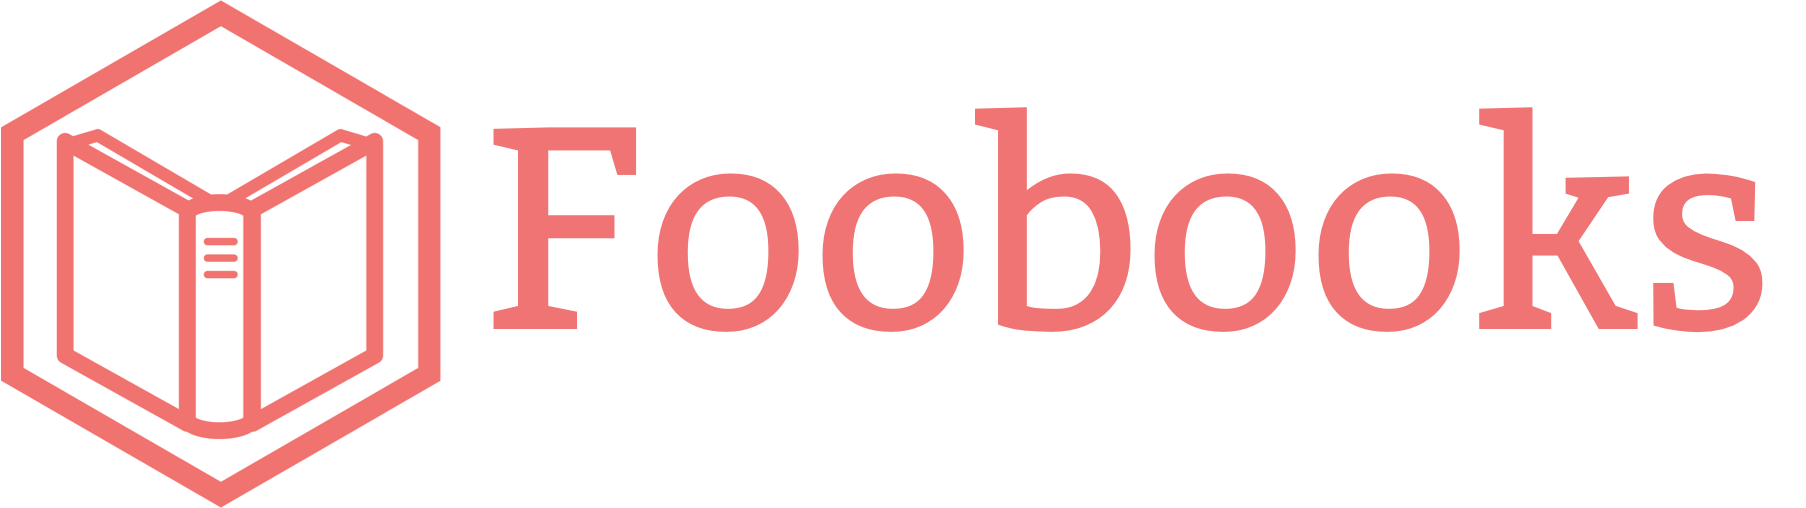 Foobooks Logo